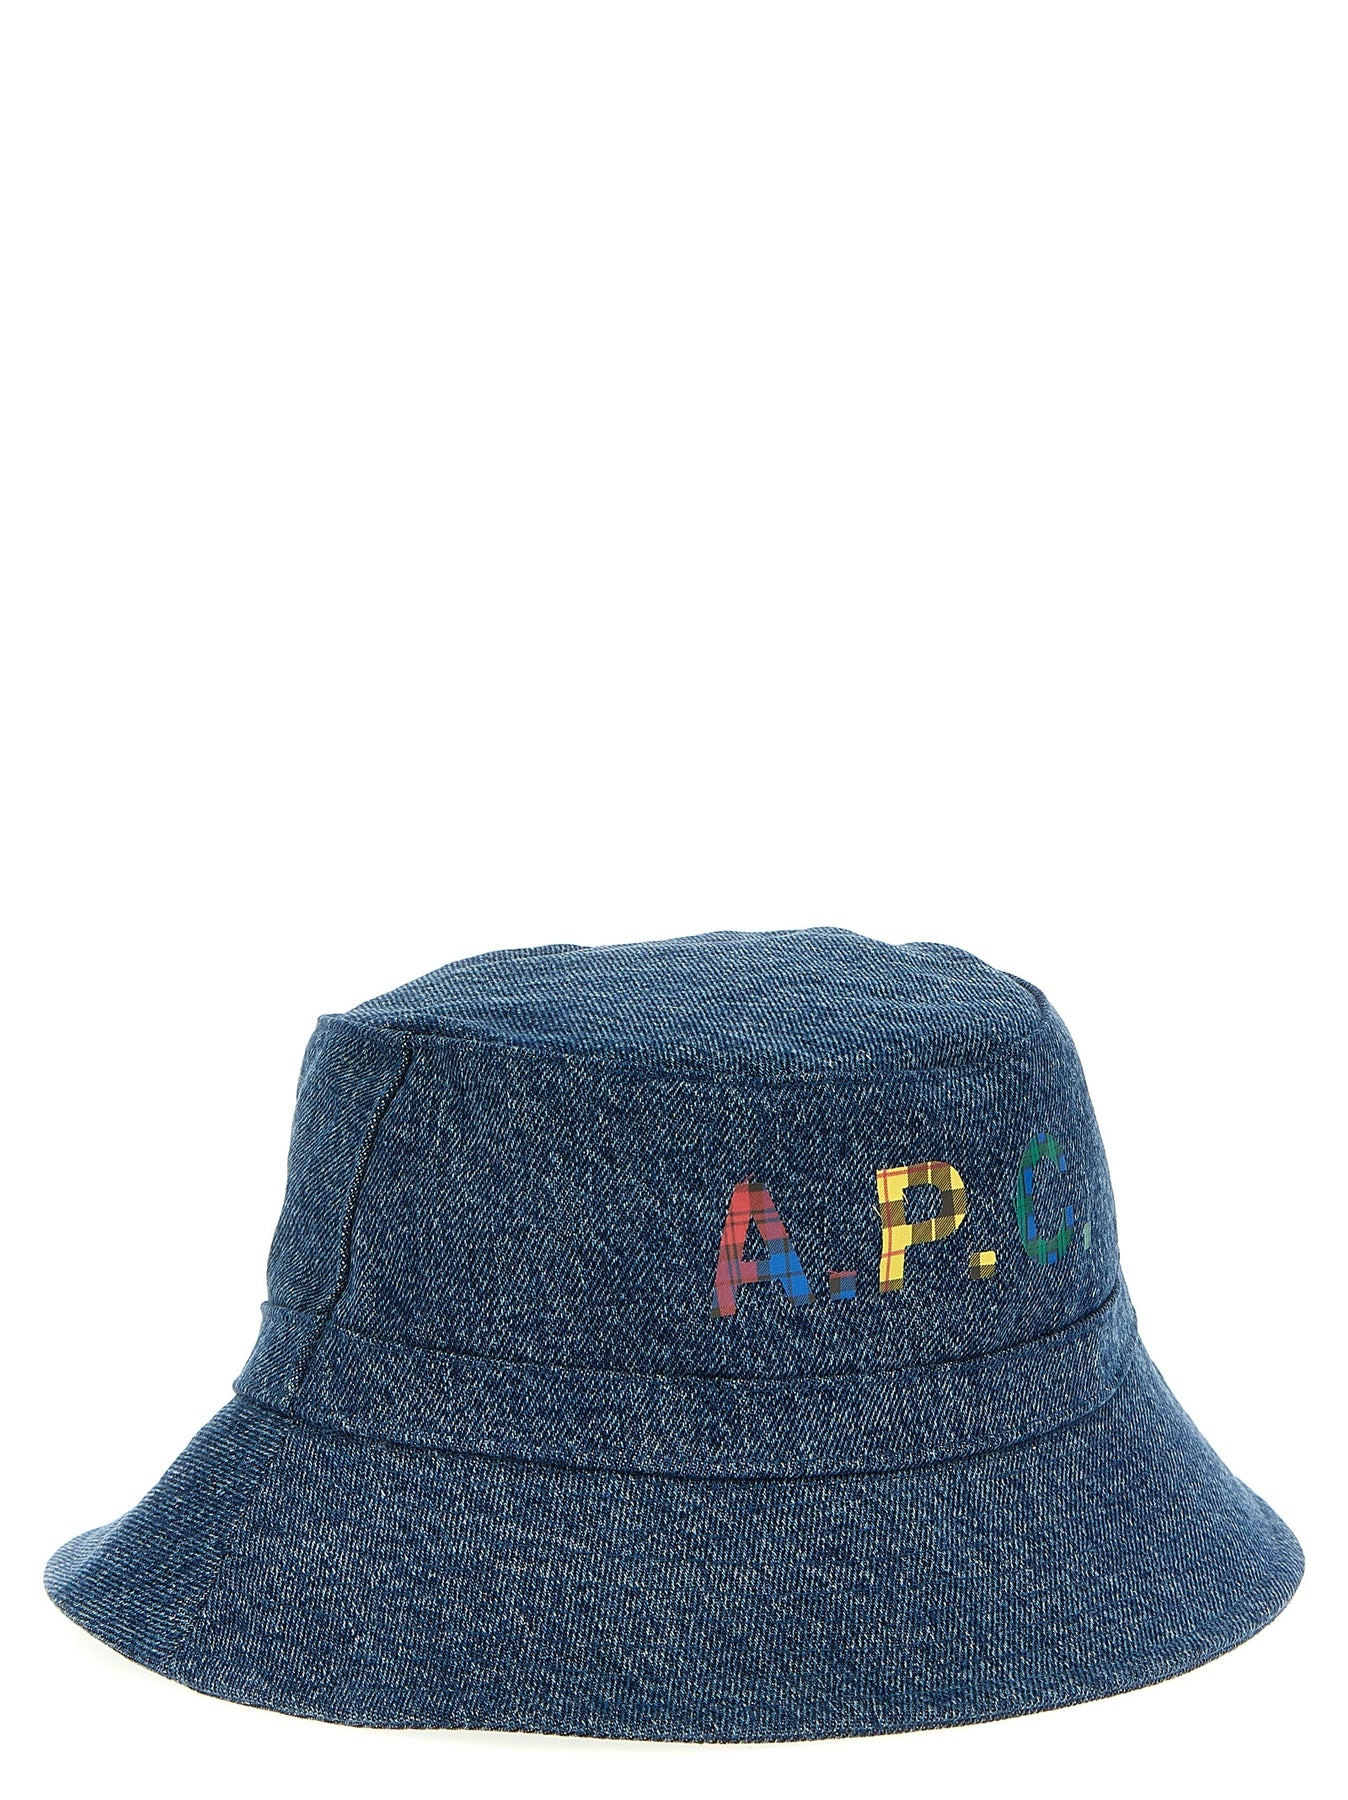 Bcuket Hat Denim Hats Light Blue - 2